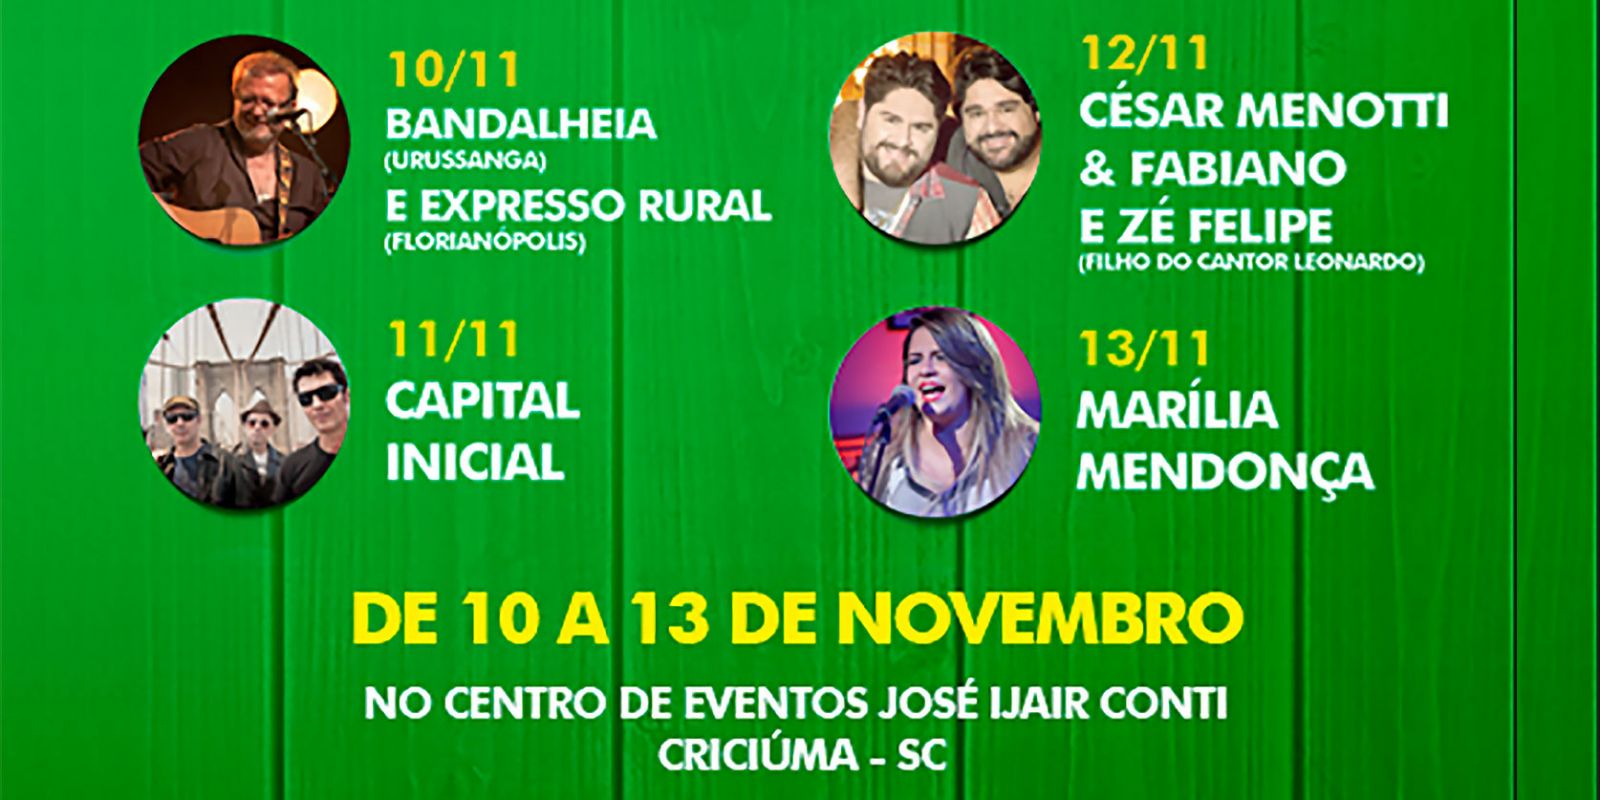 Capital Inicial, CÃ©sar Menotti e Fabiano, ZÃ© Felipe e Marilia MendonÃ§a no Festival Cultural da CachaÃ§a. 